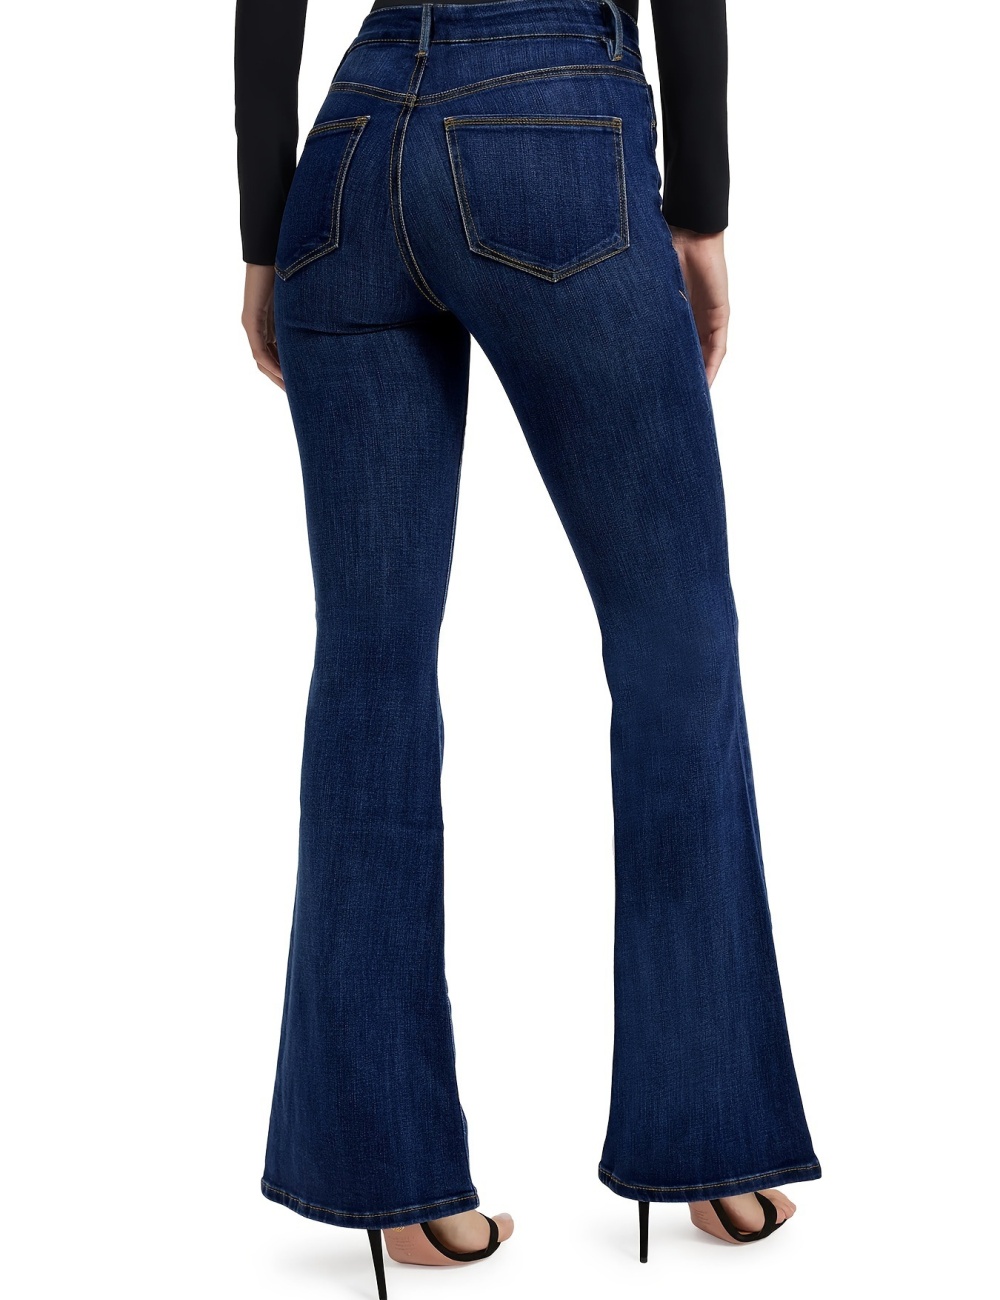 Micro speaker jeans long pants for women